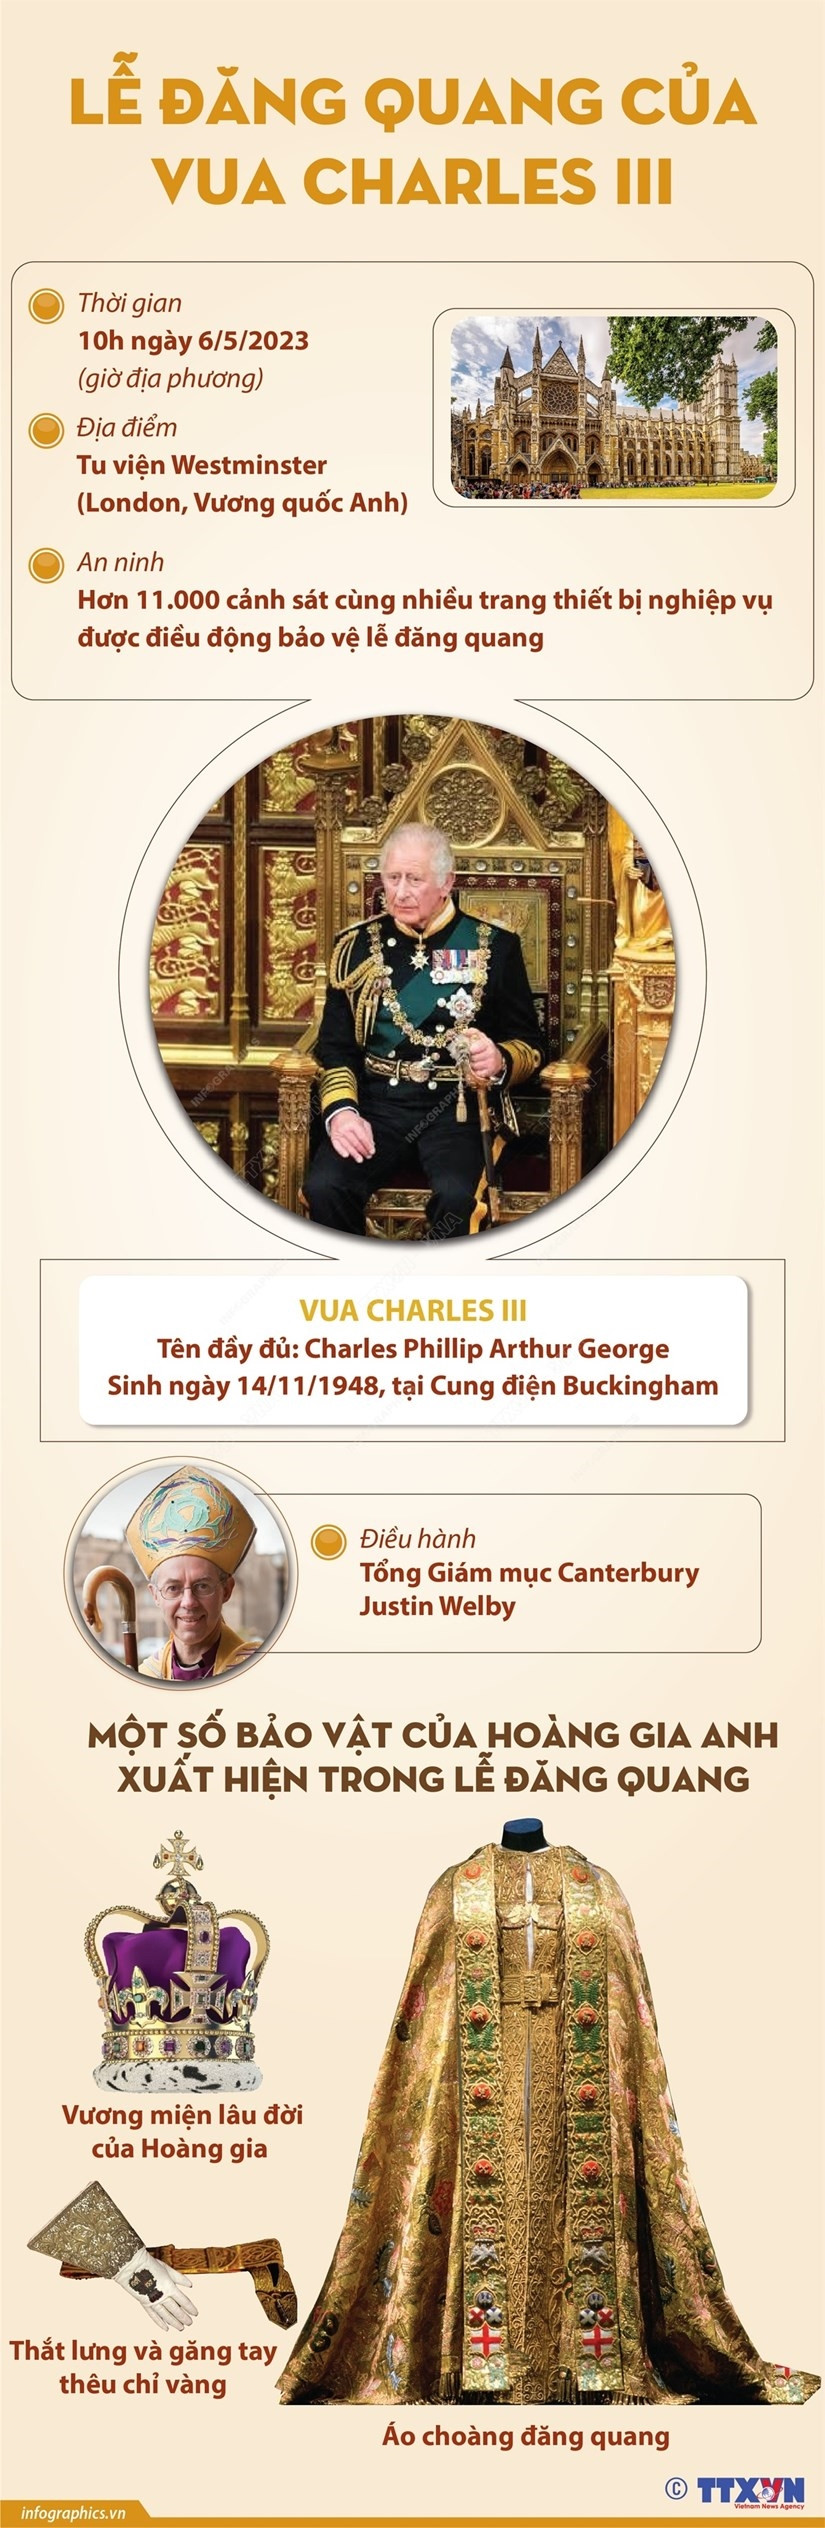 [Infographics] Thong tin chi tiet ve Le Dang quang cua Vua Charles III hinh anh 1